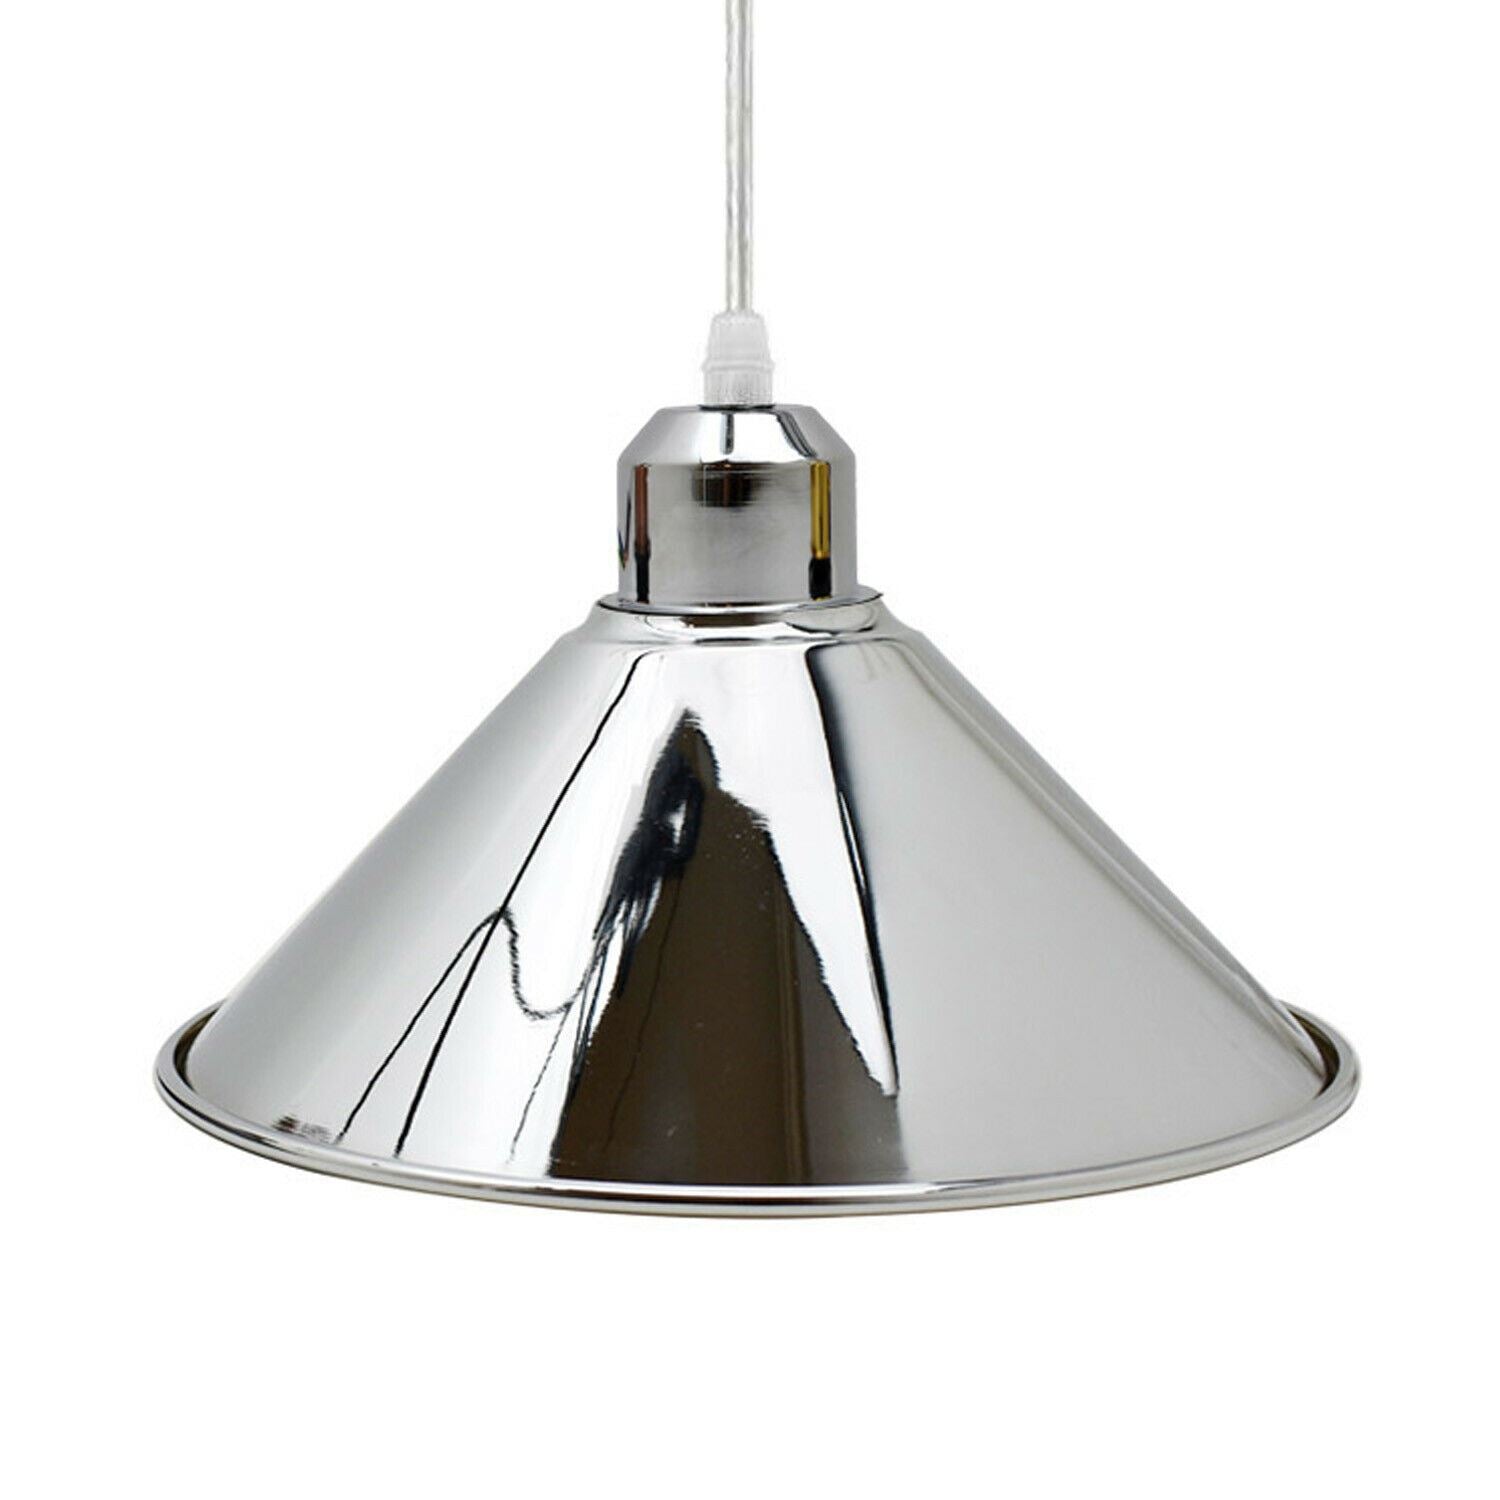 Modern Industrial Chrome 3 Way Ceiling Pendant Light Metal Cone Shape Shade Indoor Hanging Lighting For Bedroom, Dining Room, Living Room~1183 - LEDSone UK Ltd